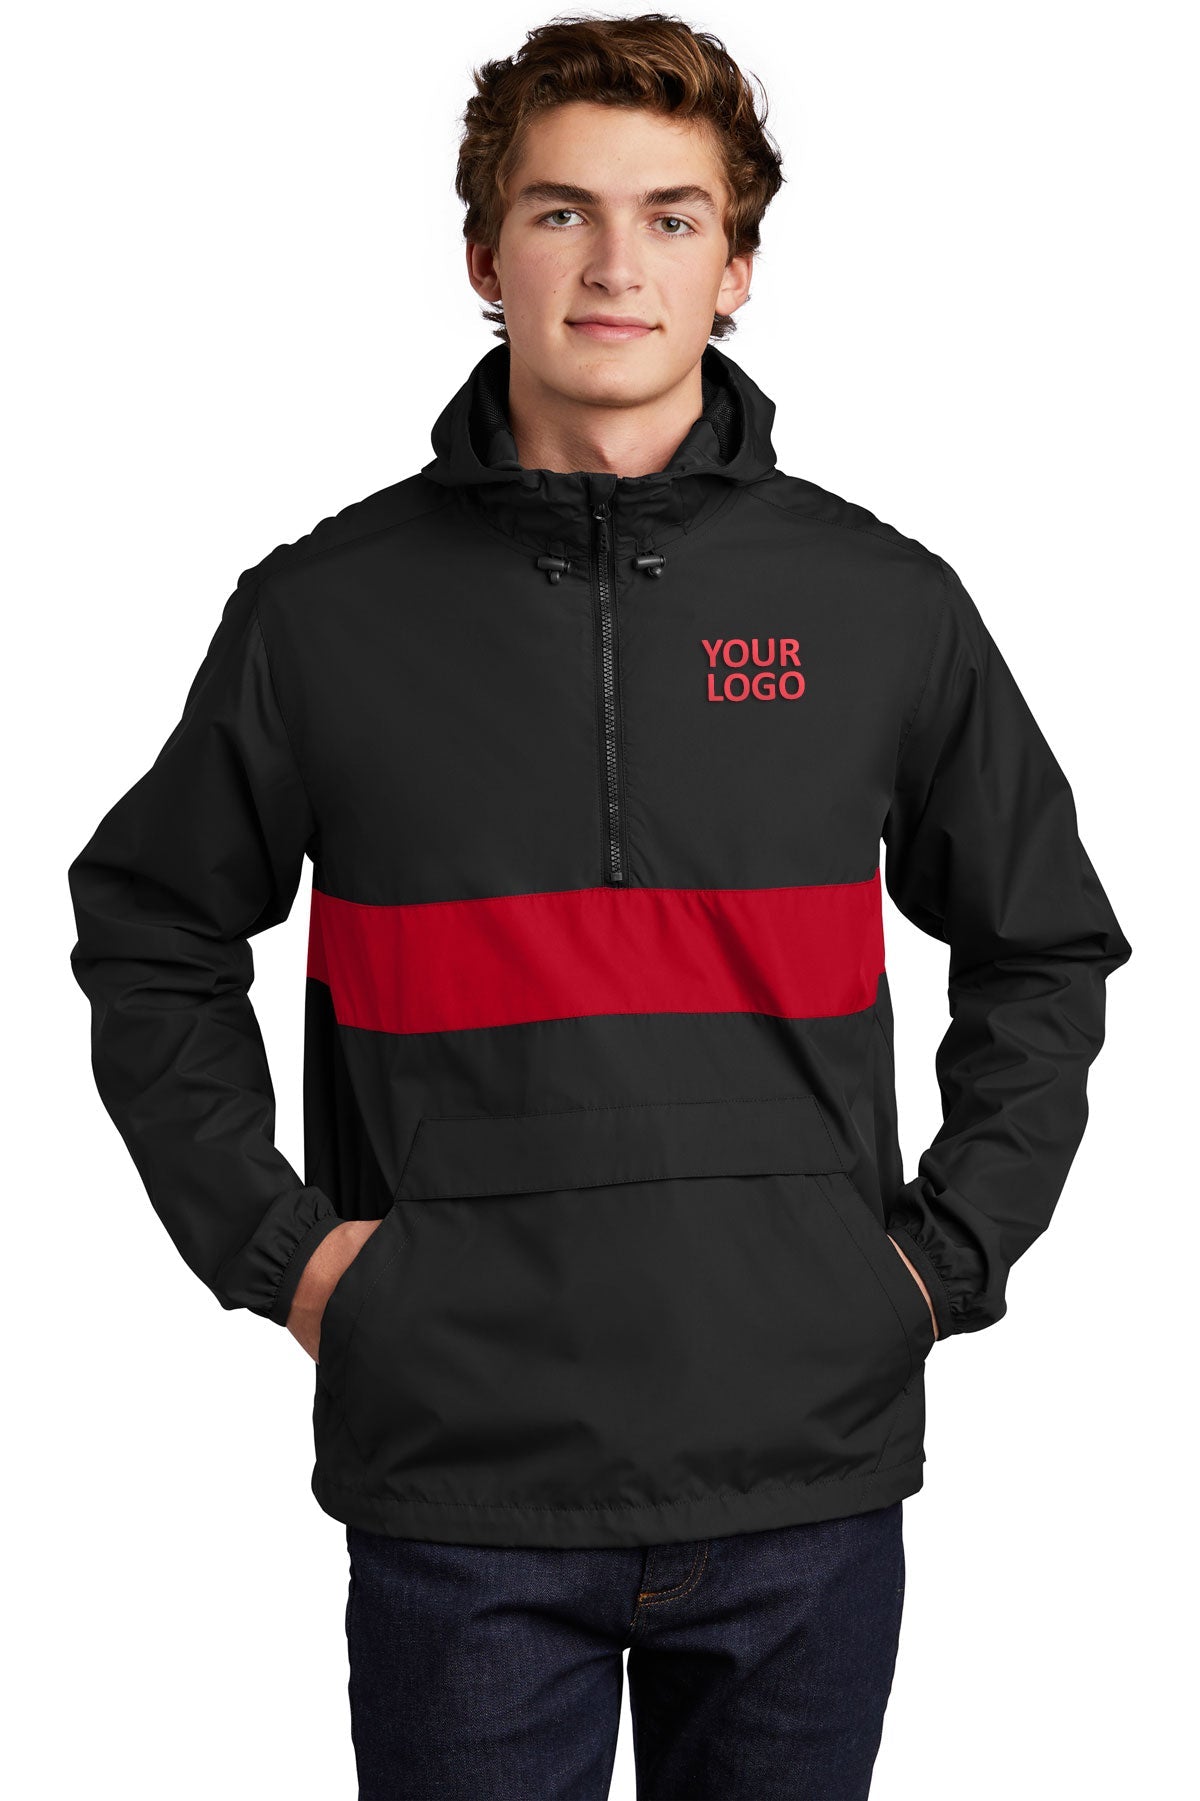 Sport-Tek Black/ True Red JST65 jacket company logo